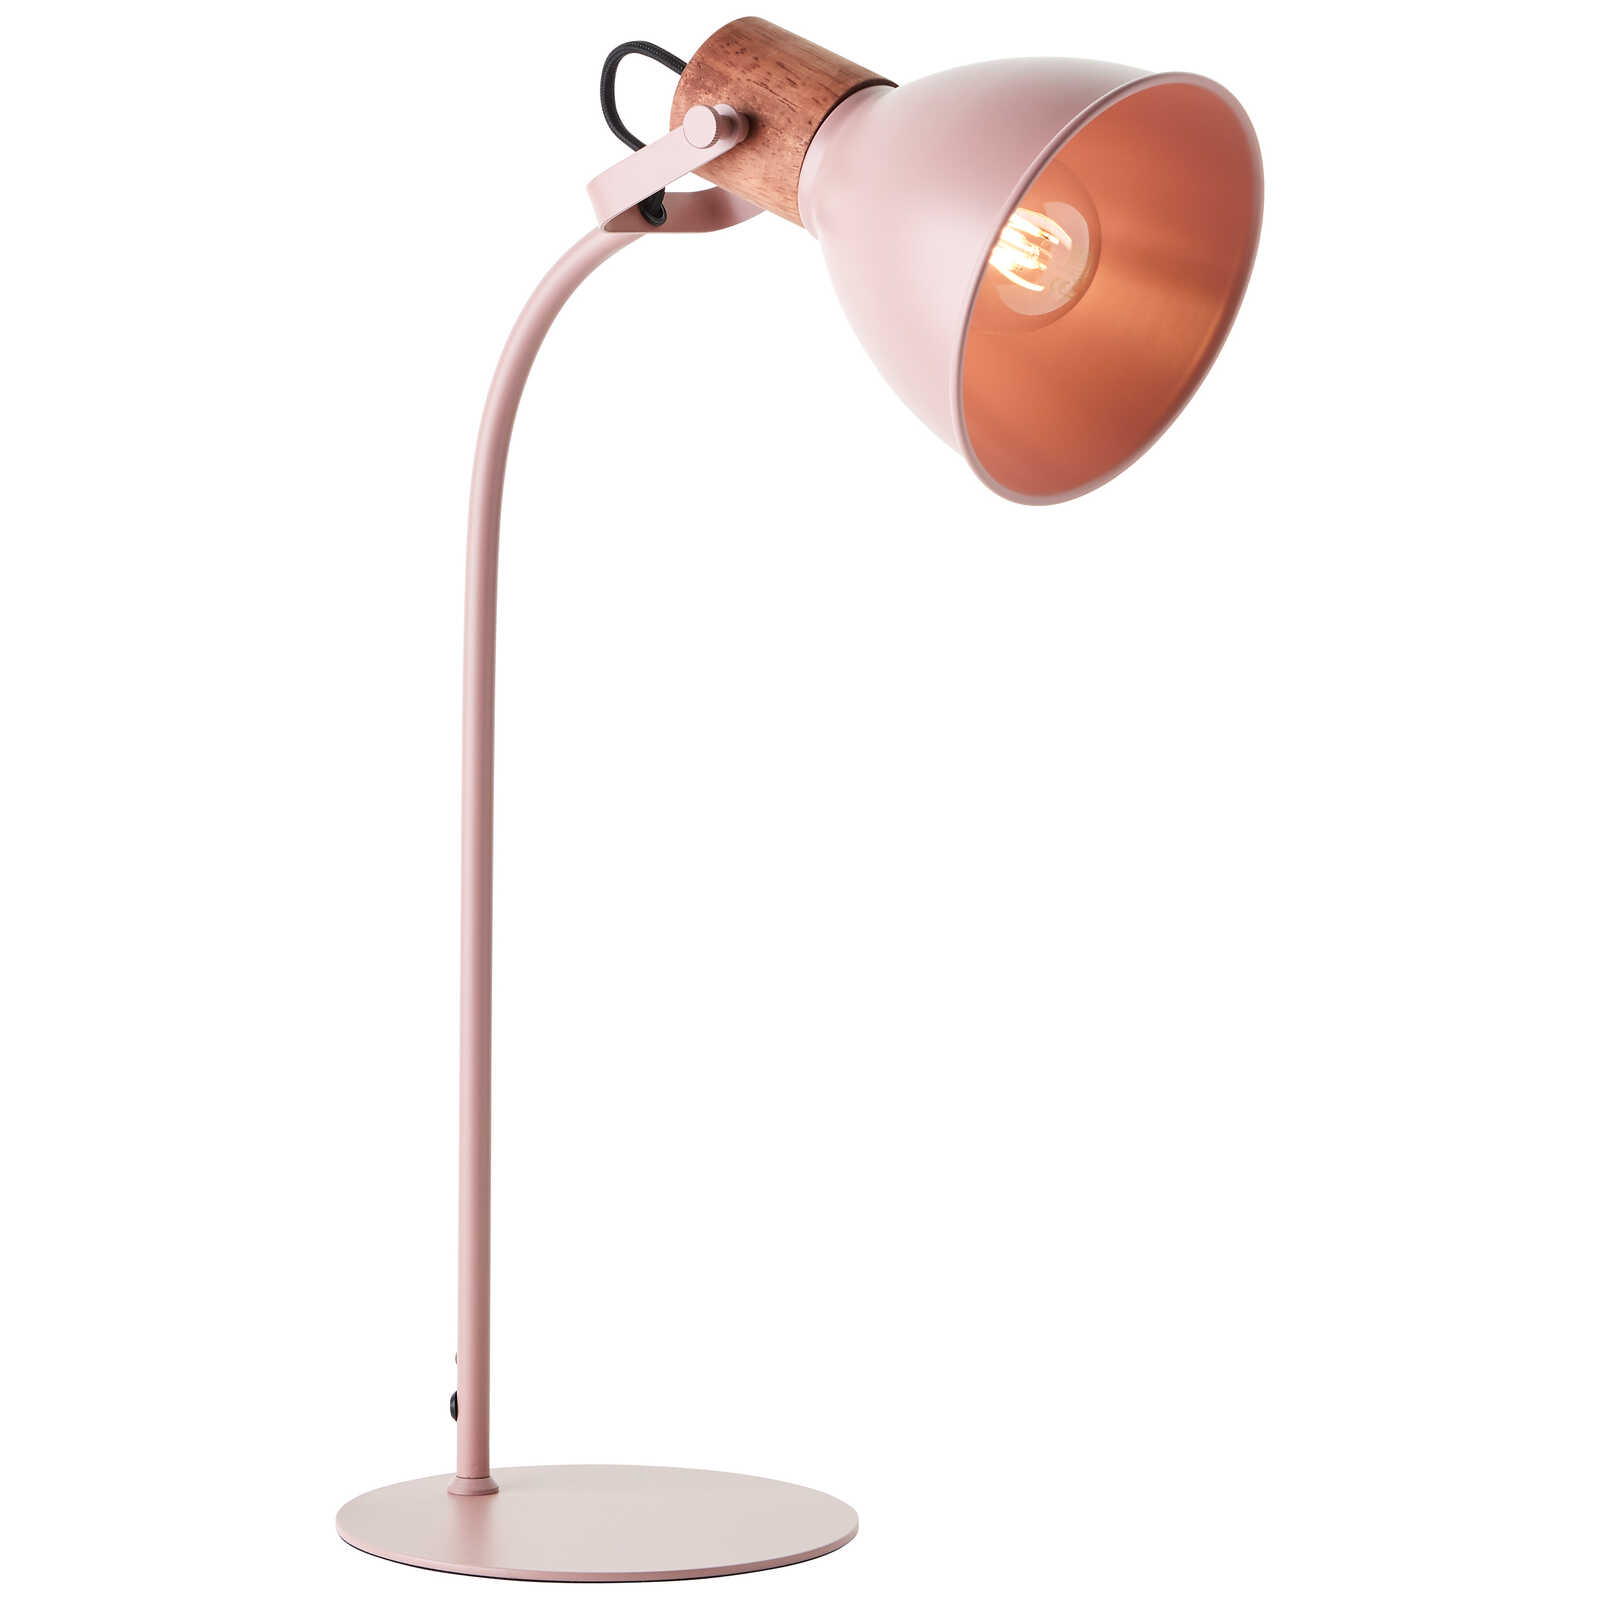             Houten tafellamp - Franziska 1 - Roze
        